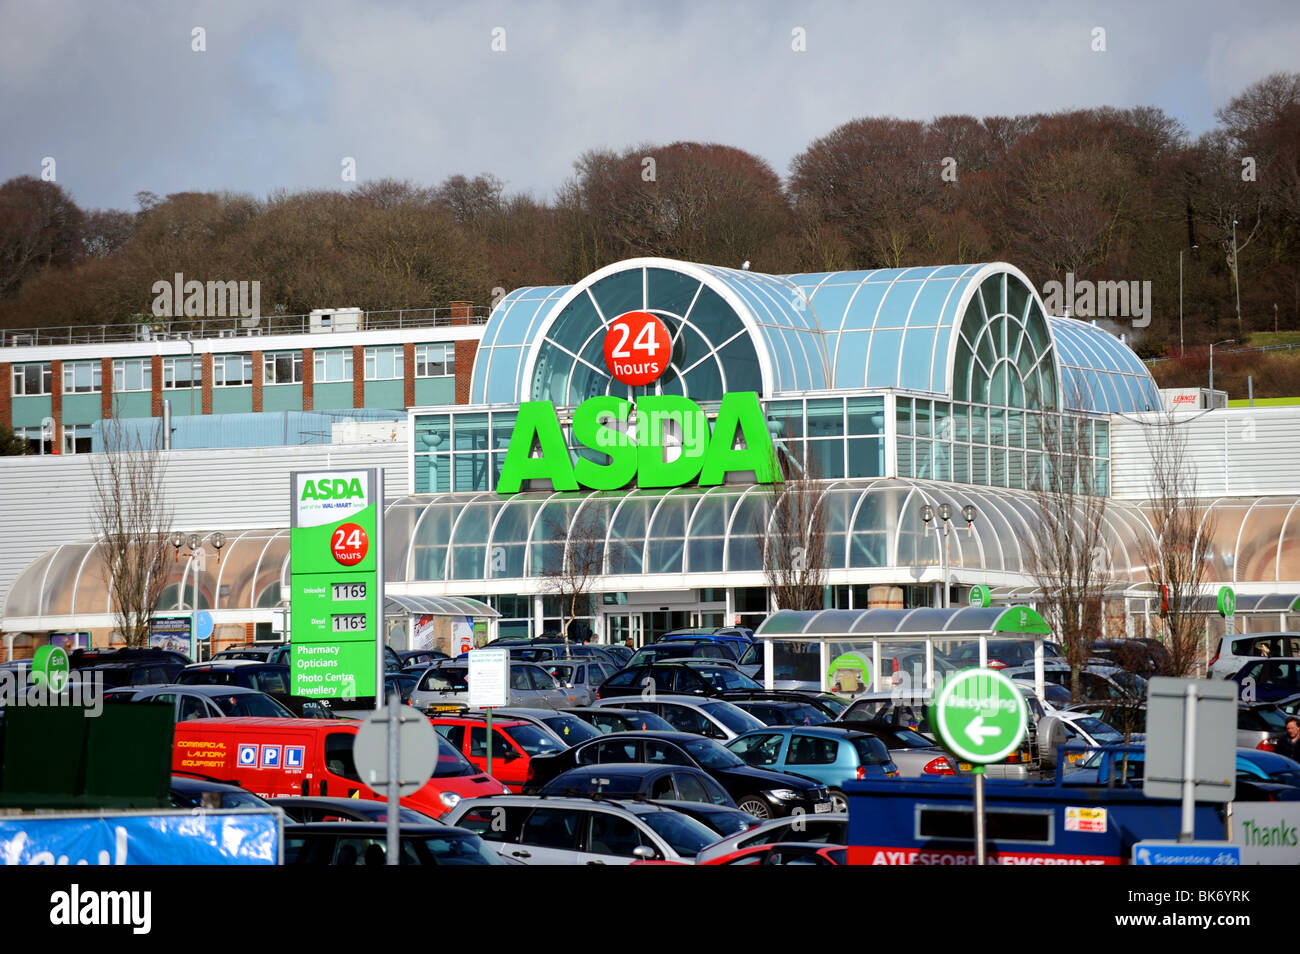 ASDA supermarket store sign in Hollingbury Brighton UK Stock Photo